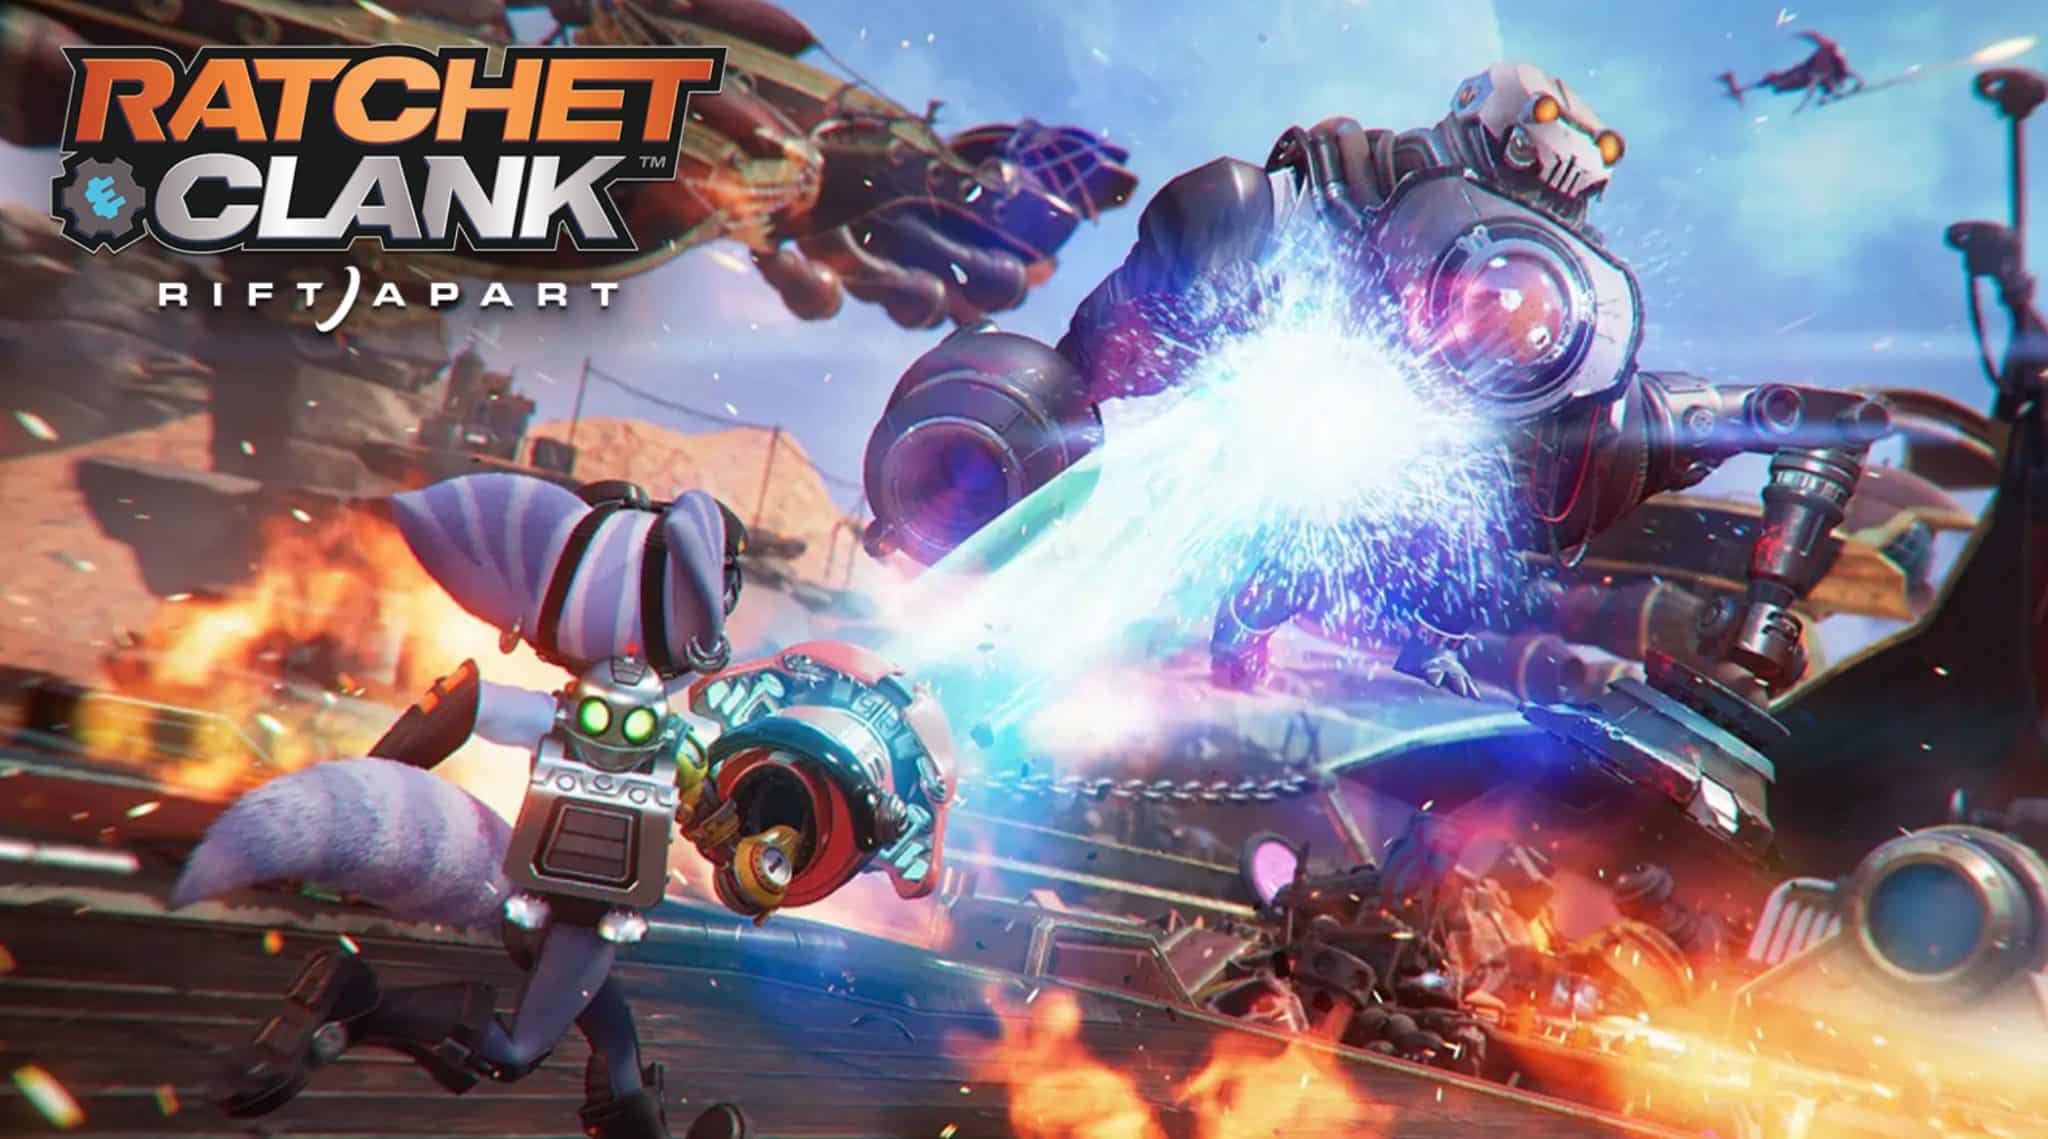 Ratchet & Clank: Rift Apart Review – NODE Gamers